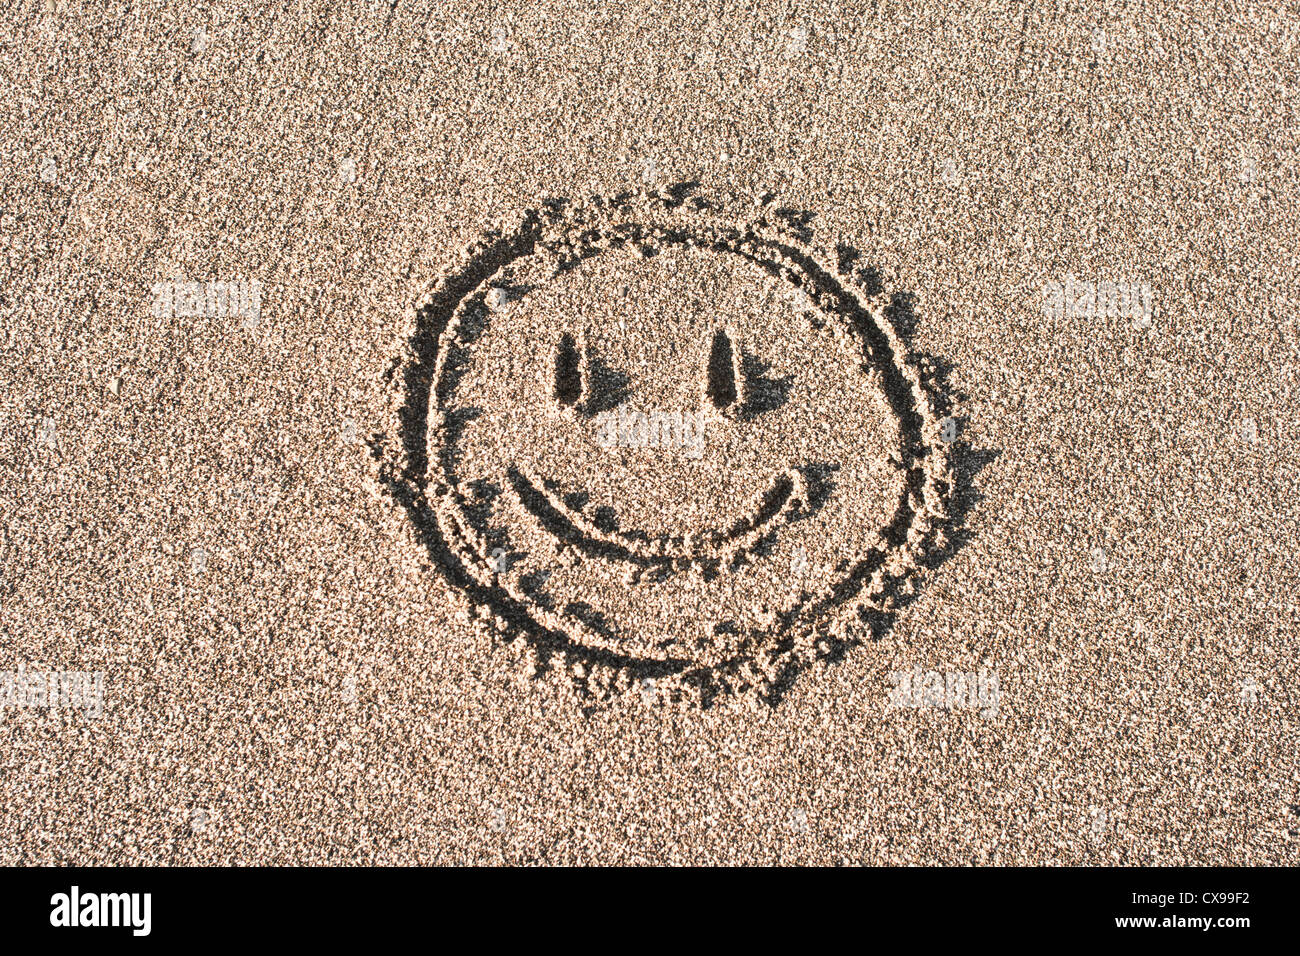 Smiley face drawn on beach sand Stock Photo